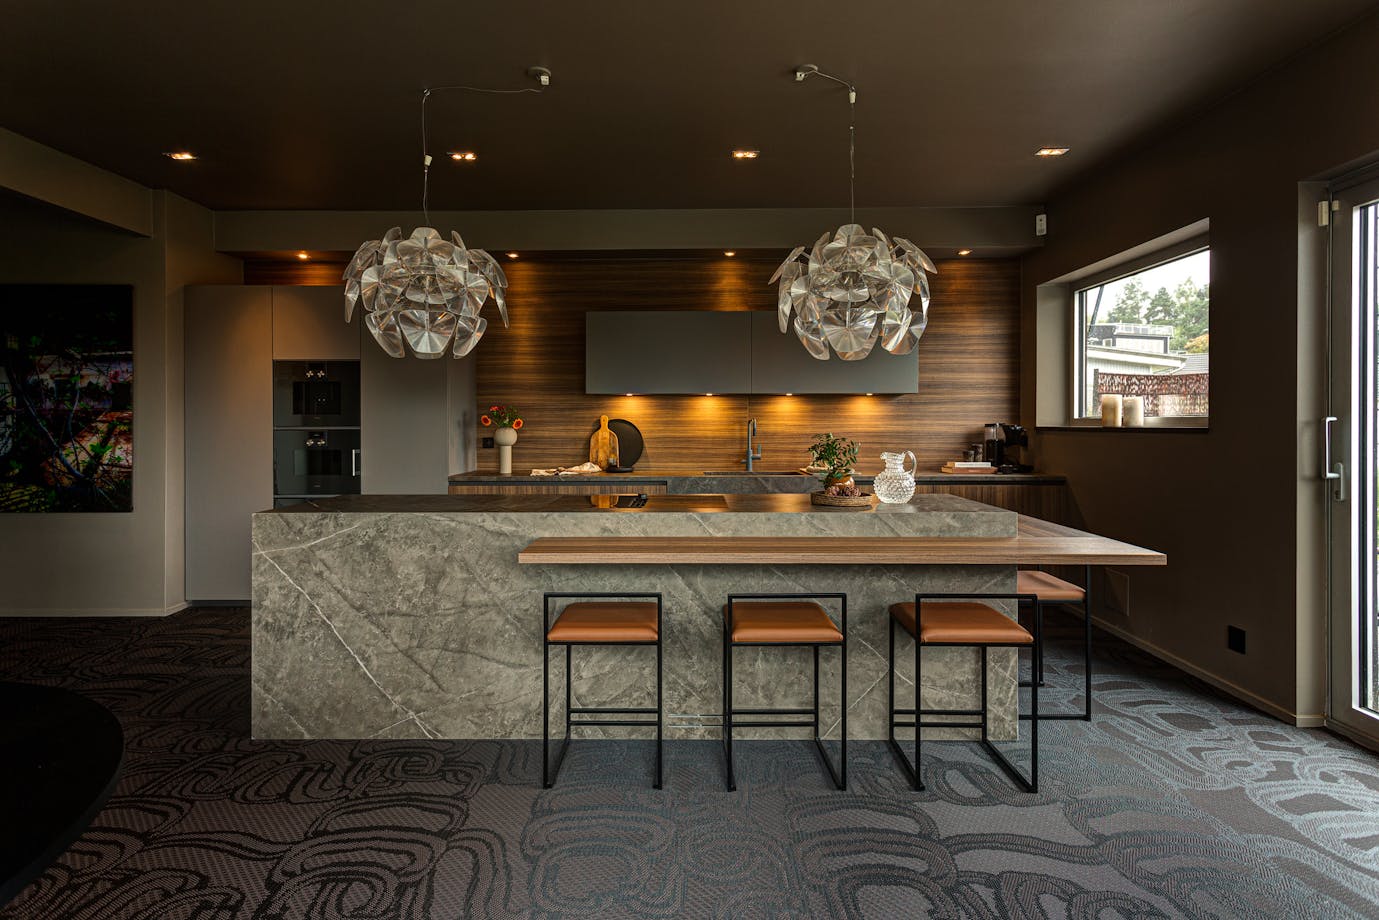 Exquisite Dekton Kira- kitchen in Stockholm through kitchen designer @Arredo3.se